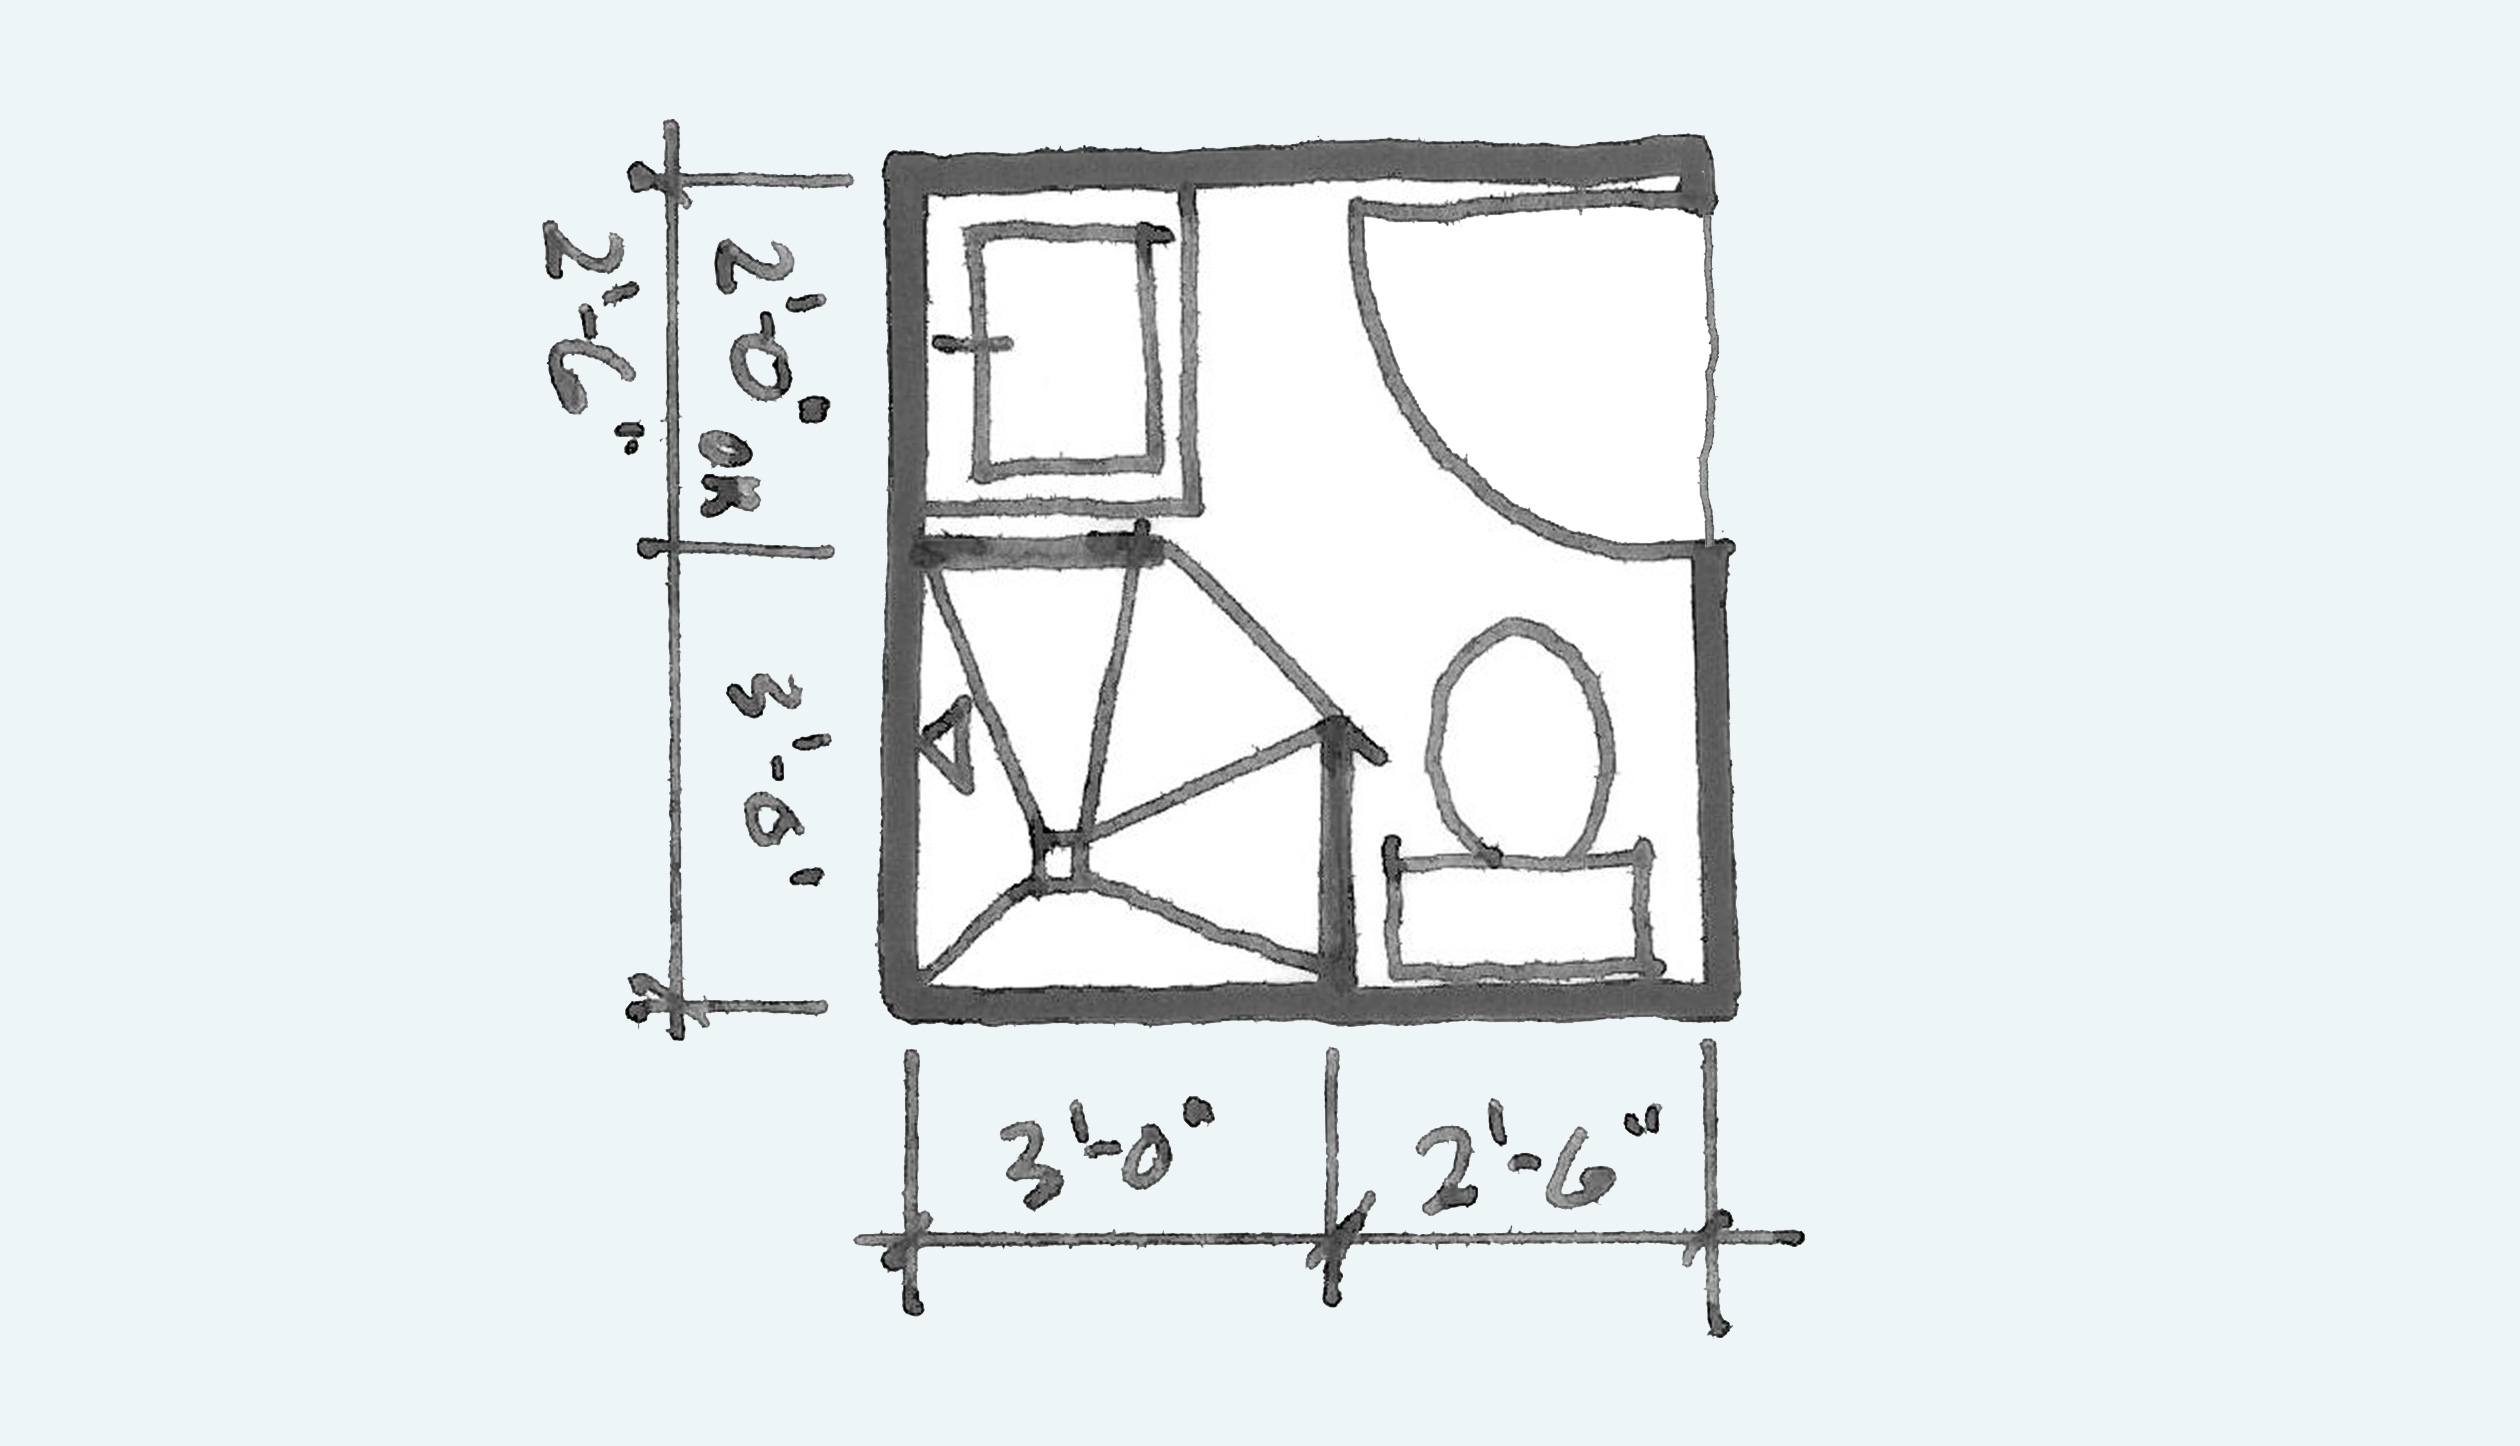 Dimensions 6' x 6' 6  Small bathroom floor plans, Bathroom floor